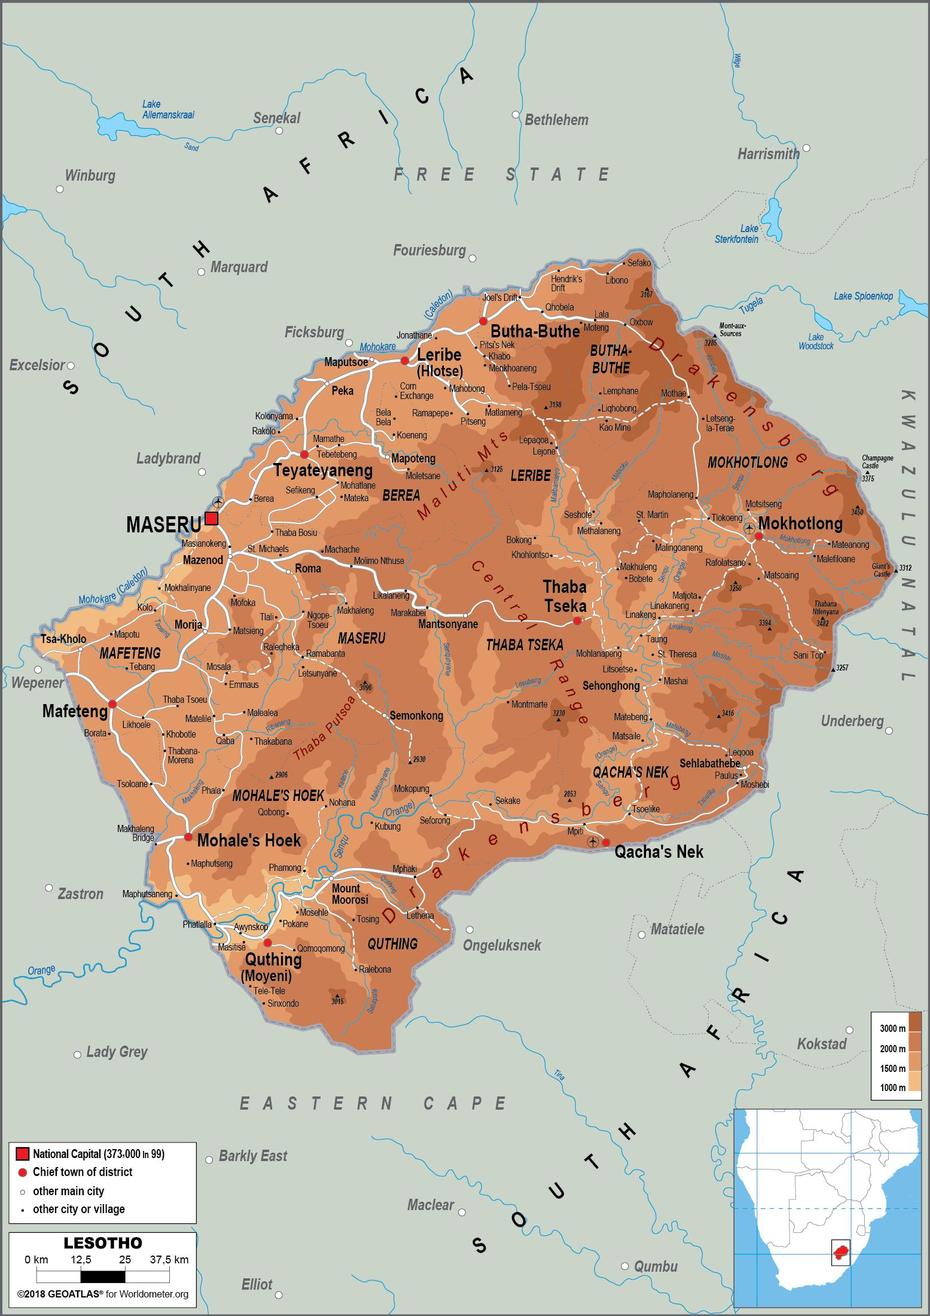 Lesotho On Map / Lesotho Map And Lesotho Satellite Images : Interactive …, Mazenod, Lesotho, Lesotho High School, Maseru Lesotho Africa